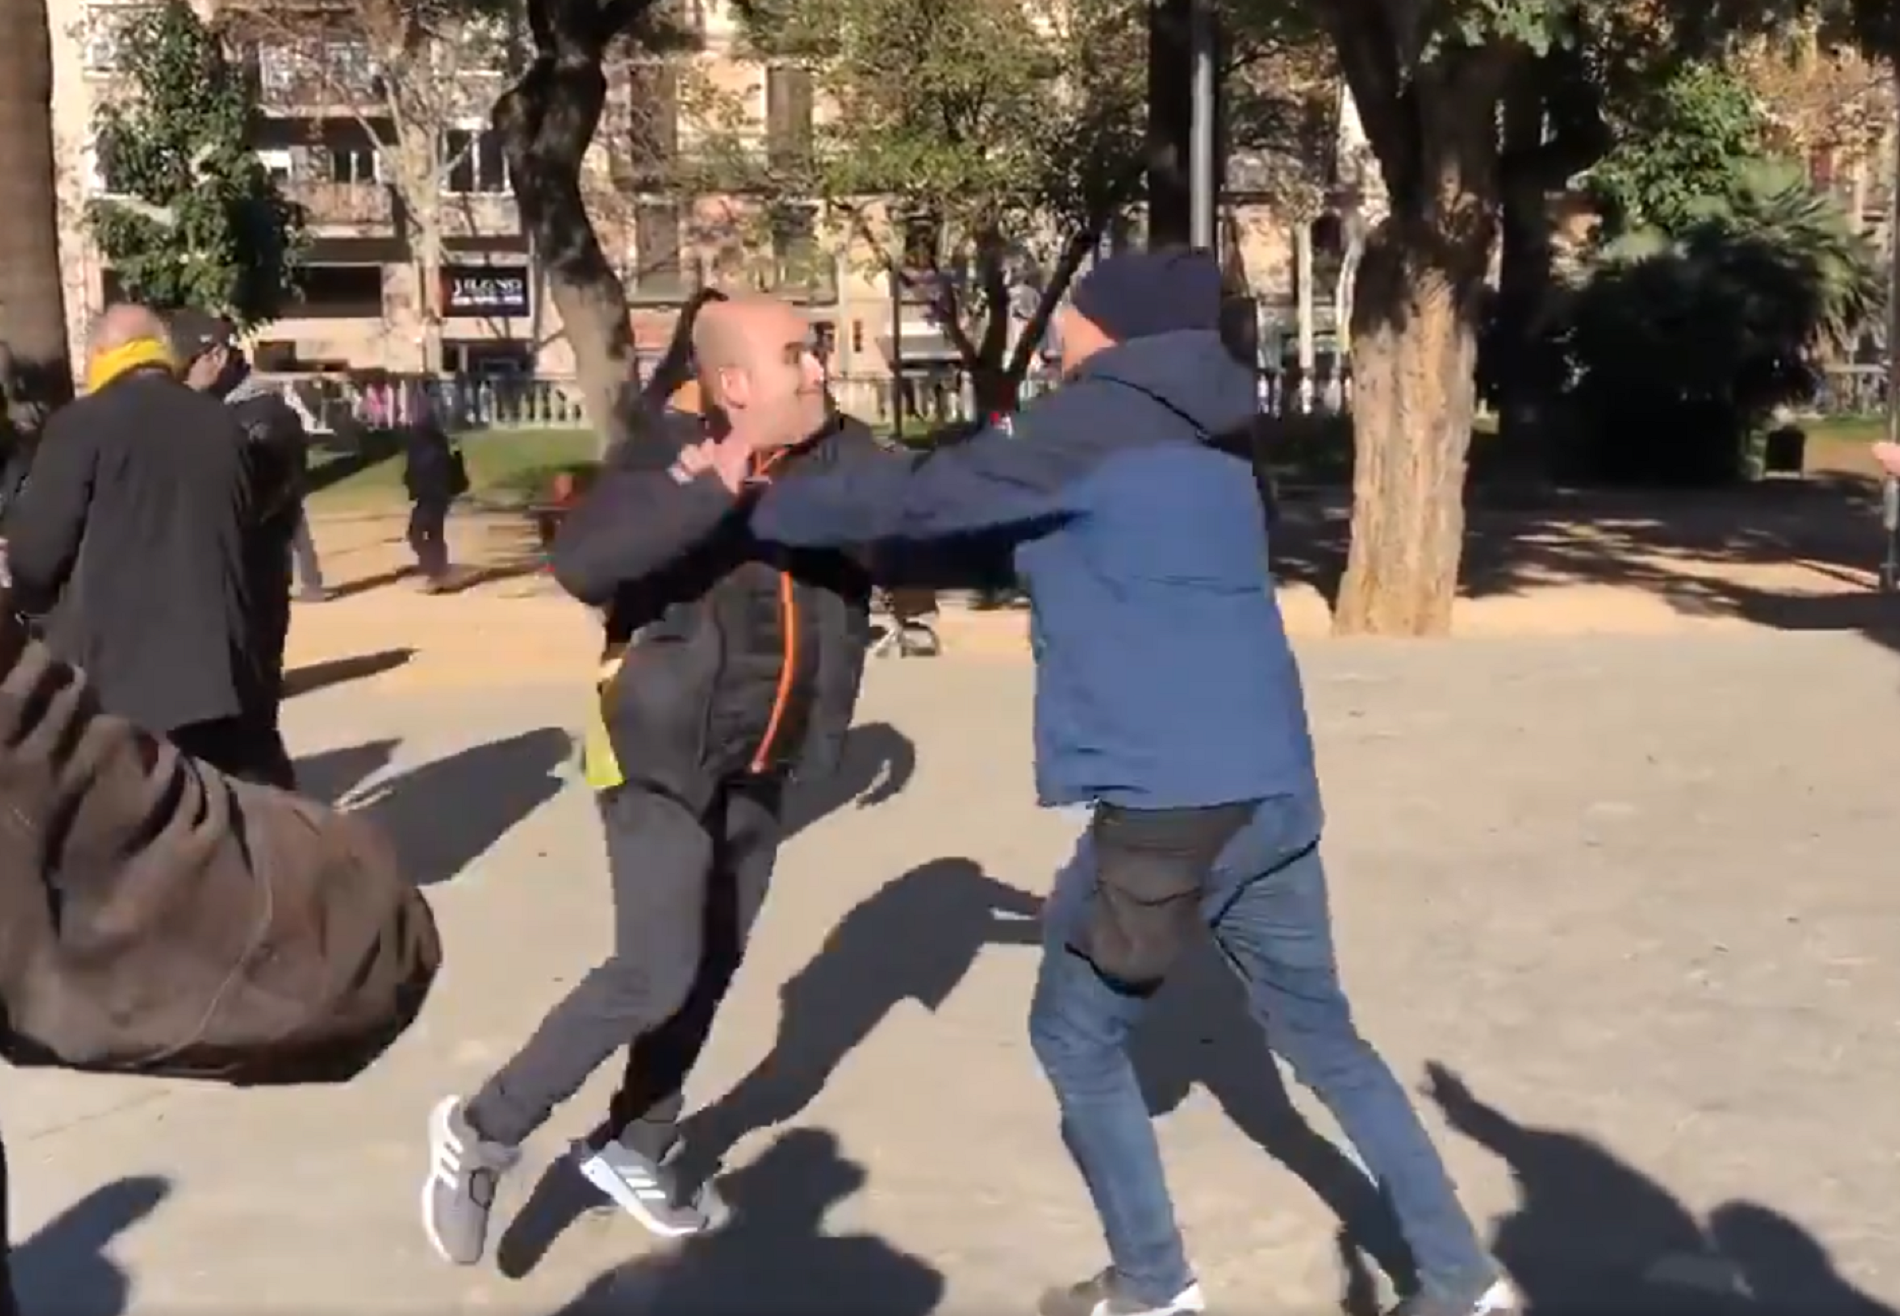 Extreme right provokes incidents in Barcelona's Plaça Tetuan